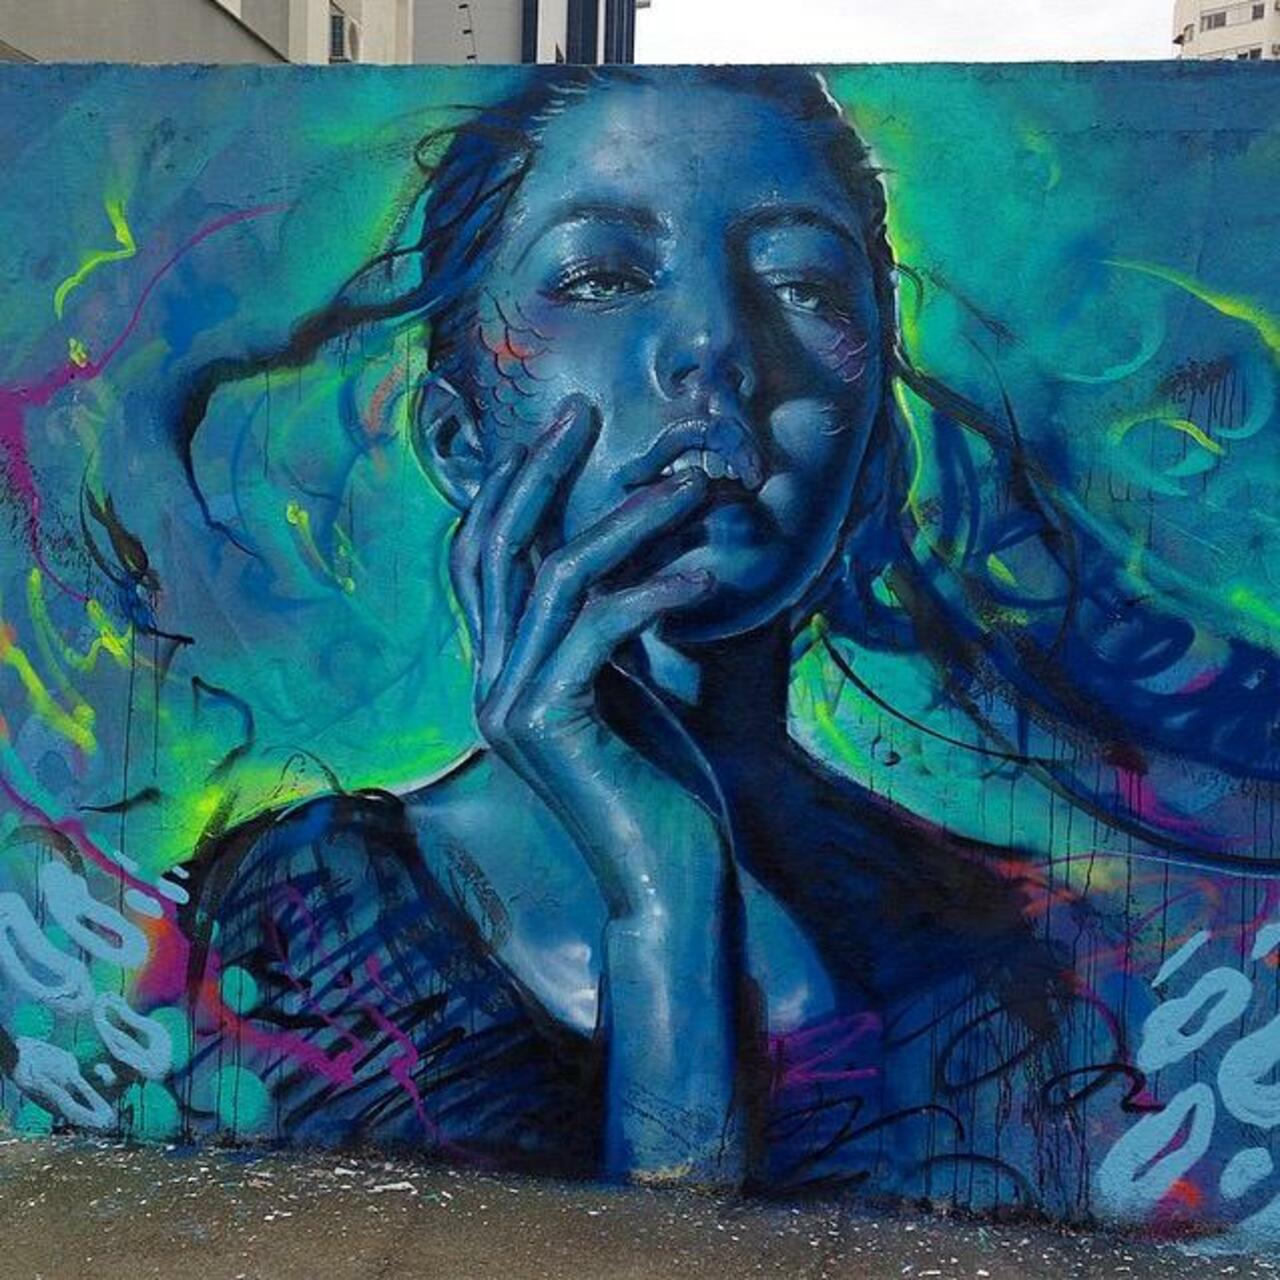 Thiago Valdi new Street Art piece titled 'Day Dreamer' #art #mural #graffiti #streetart http://t.co/3UodbQm48I …… http://twitter.com/charlesjackso14/status/652720560632426497